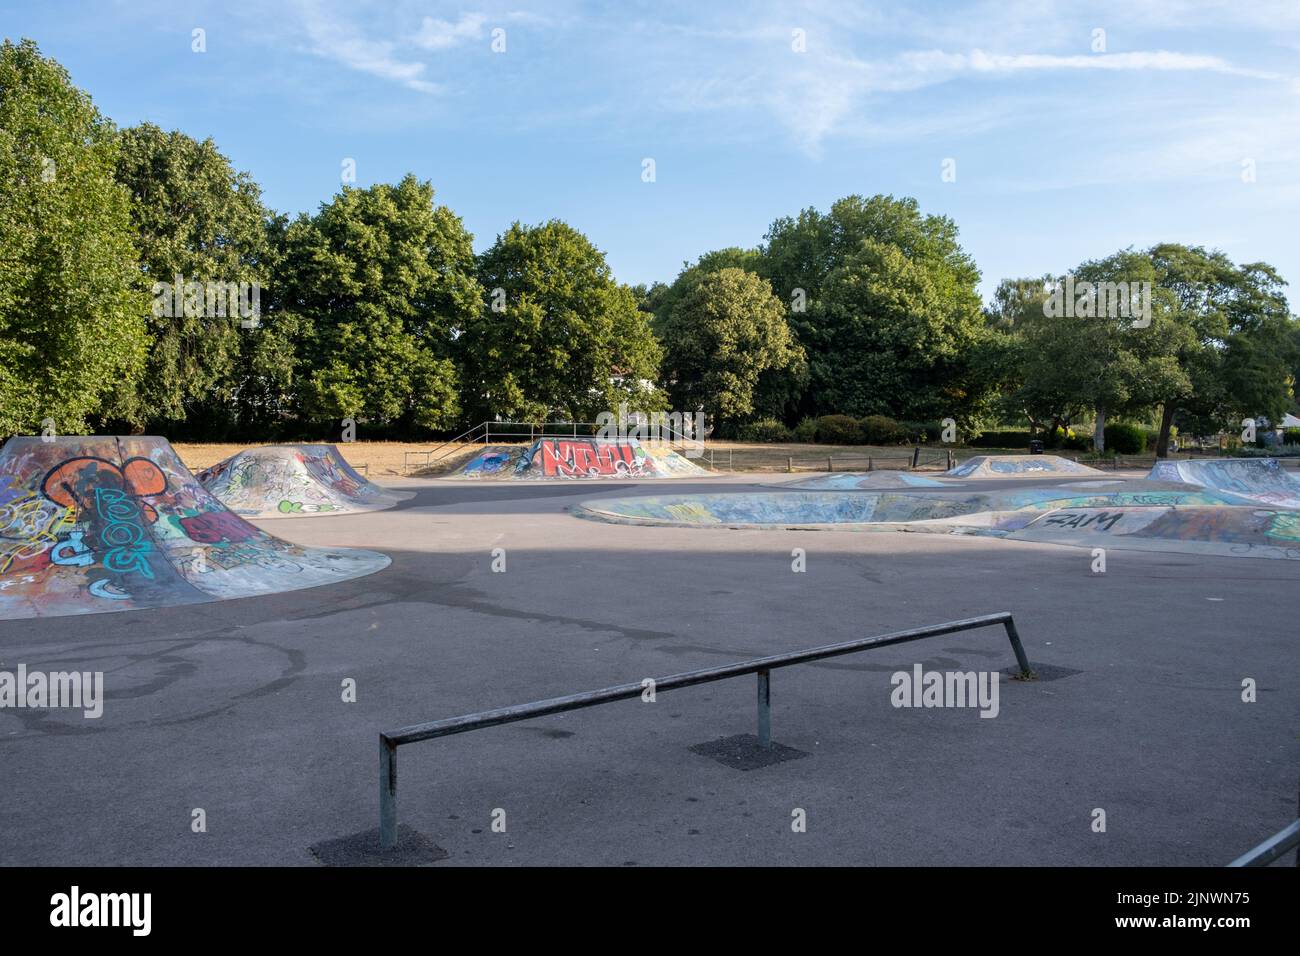 St George Park skatepark, Bristol, UK (Aug22) Stock Photo